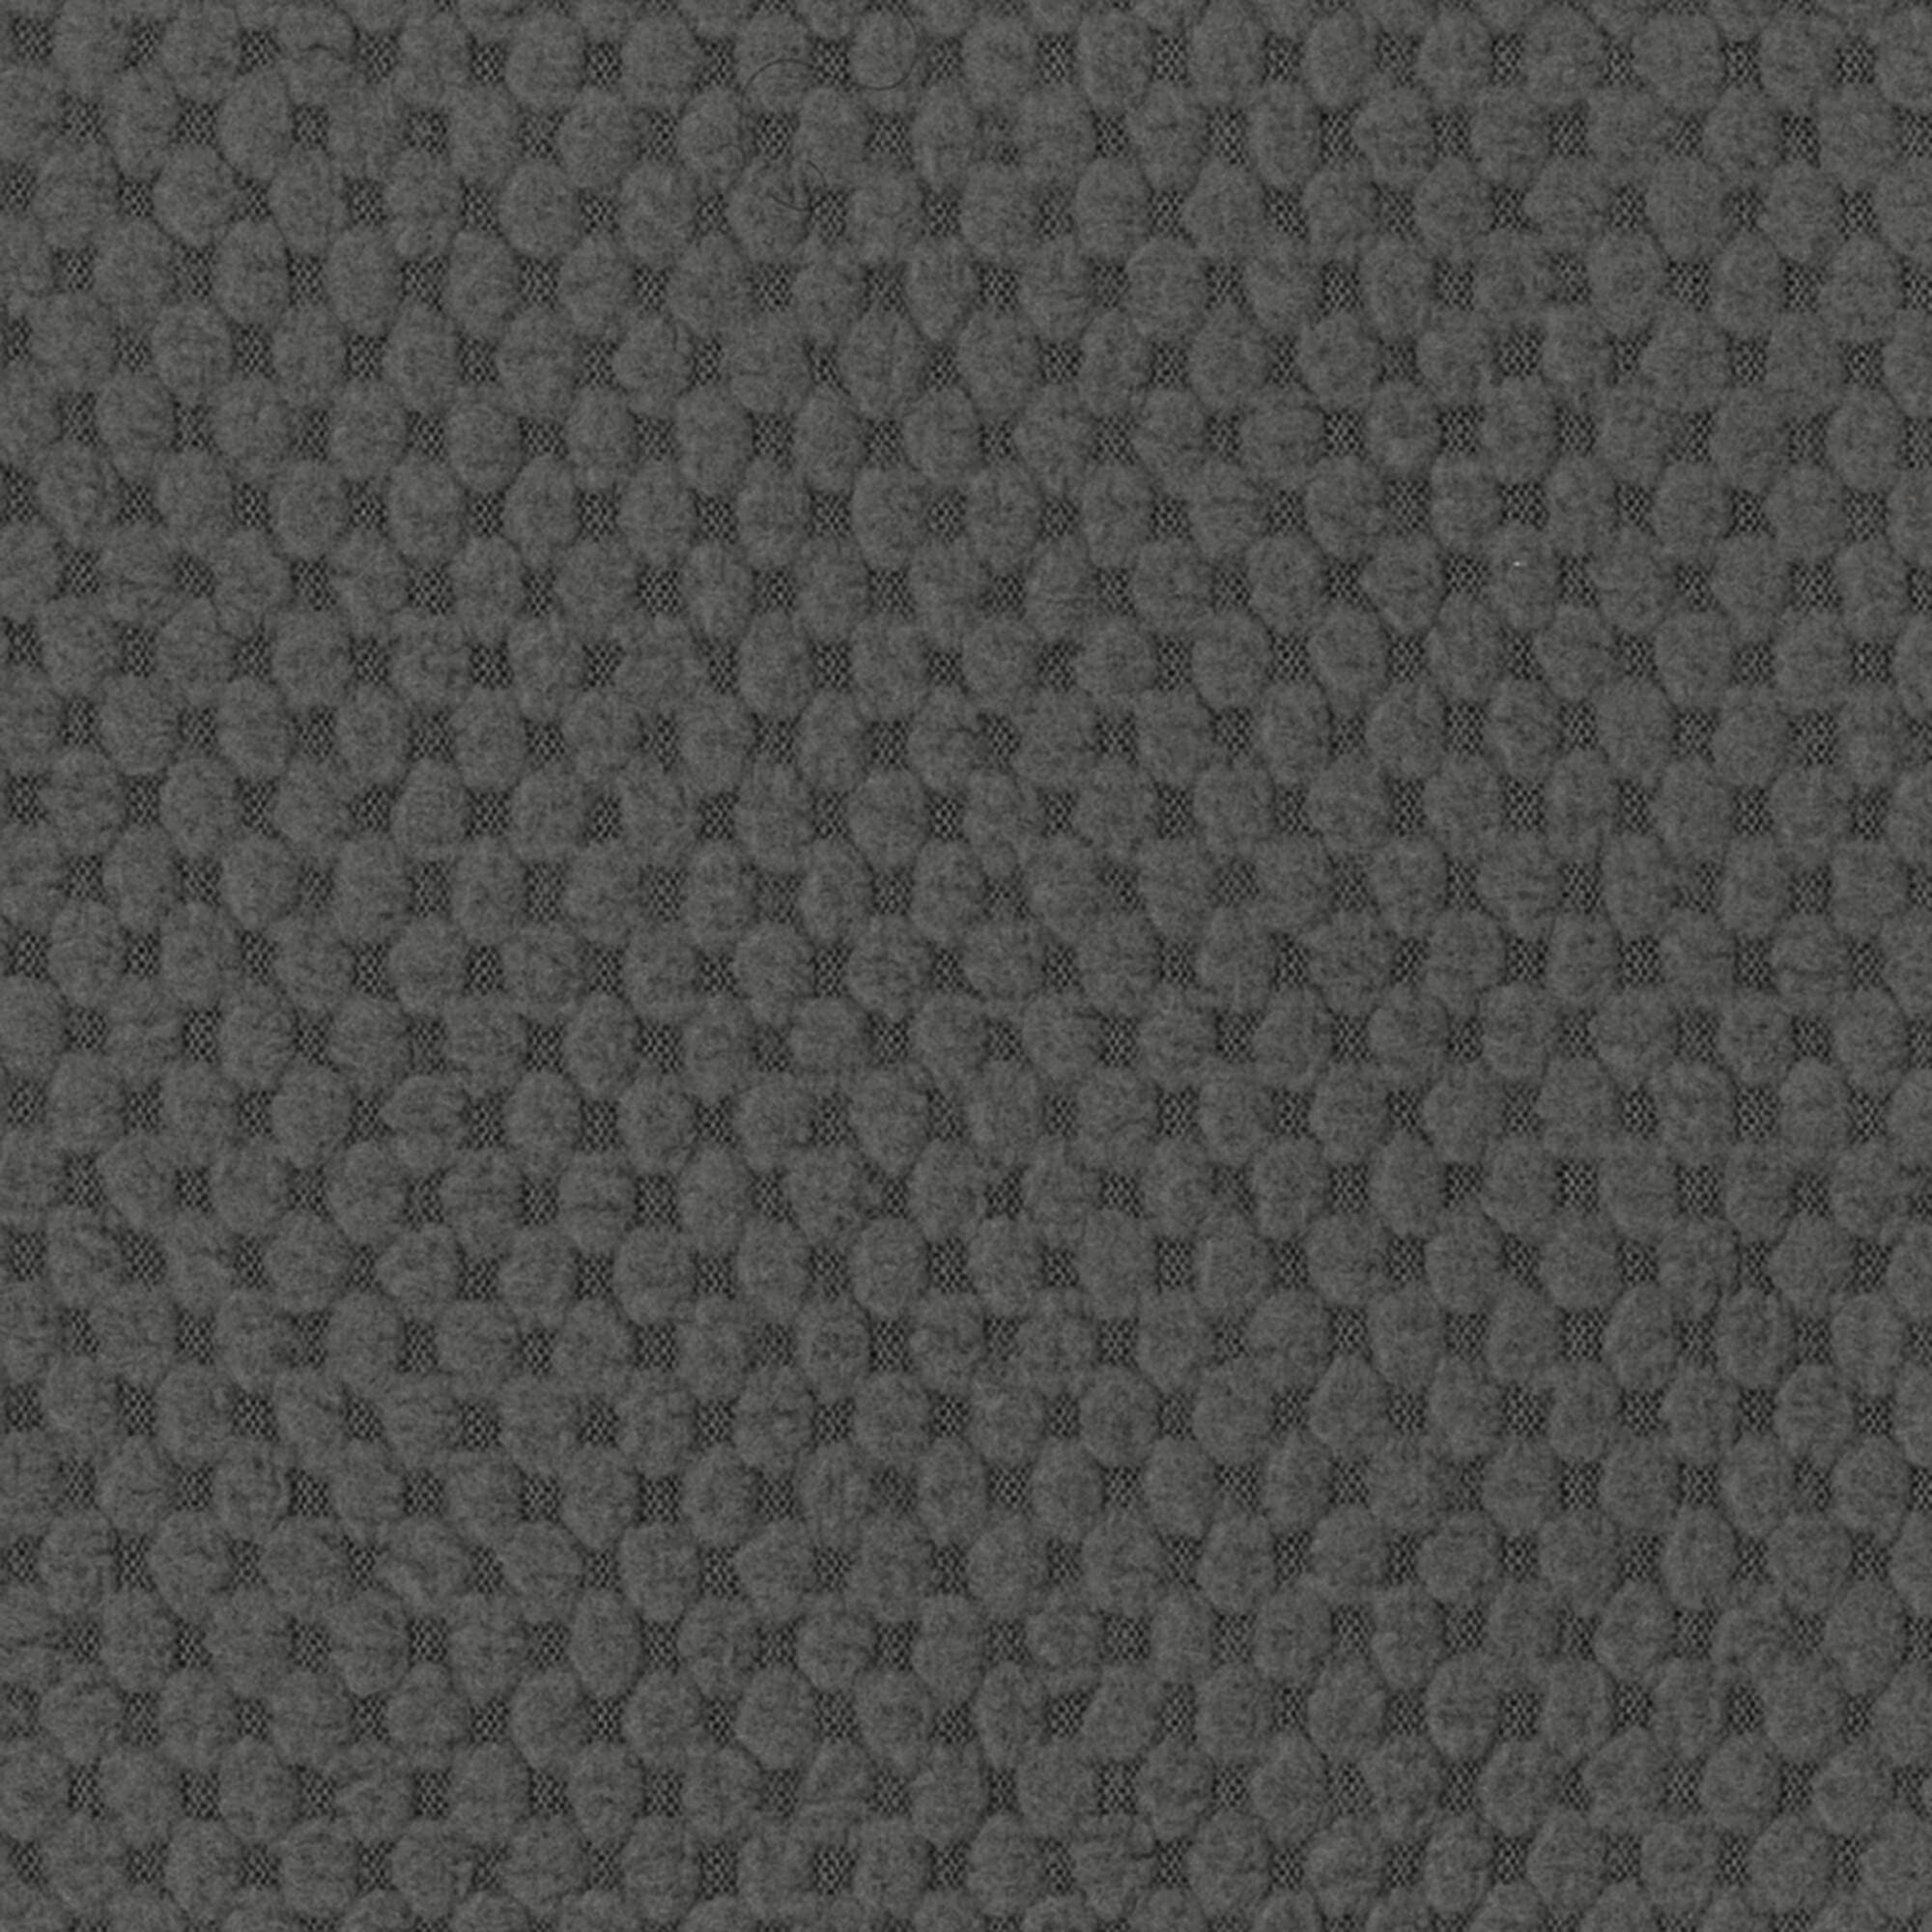 Maytex Stretch 2 Piece Pixel Sofa Slipcover / Furniture Cover